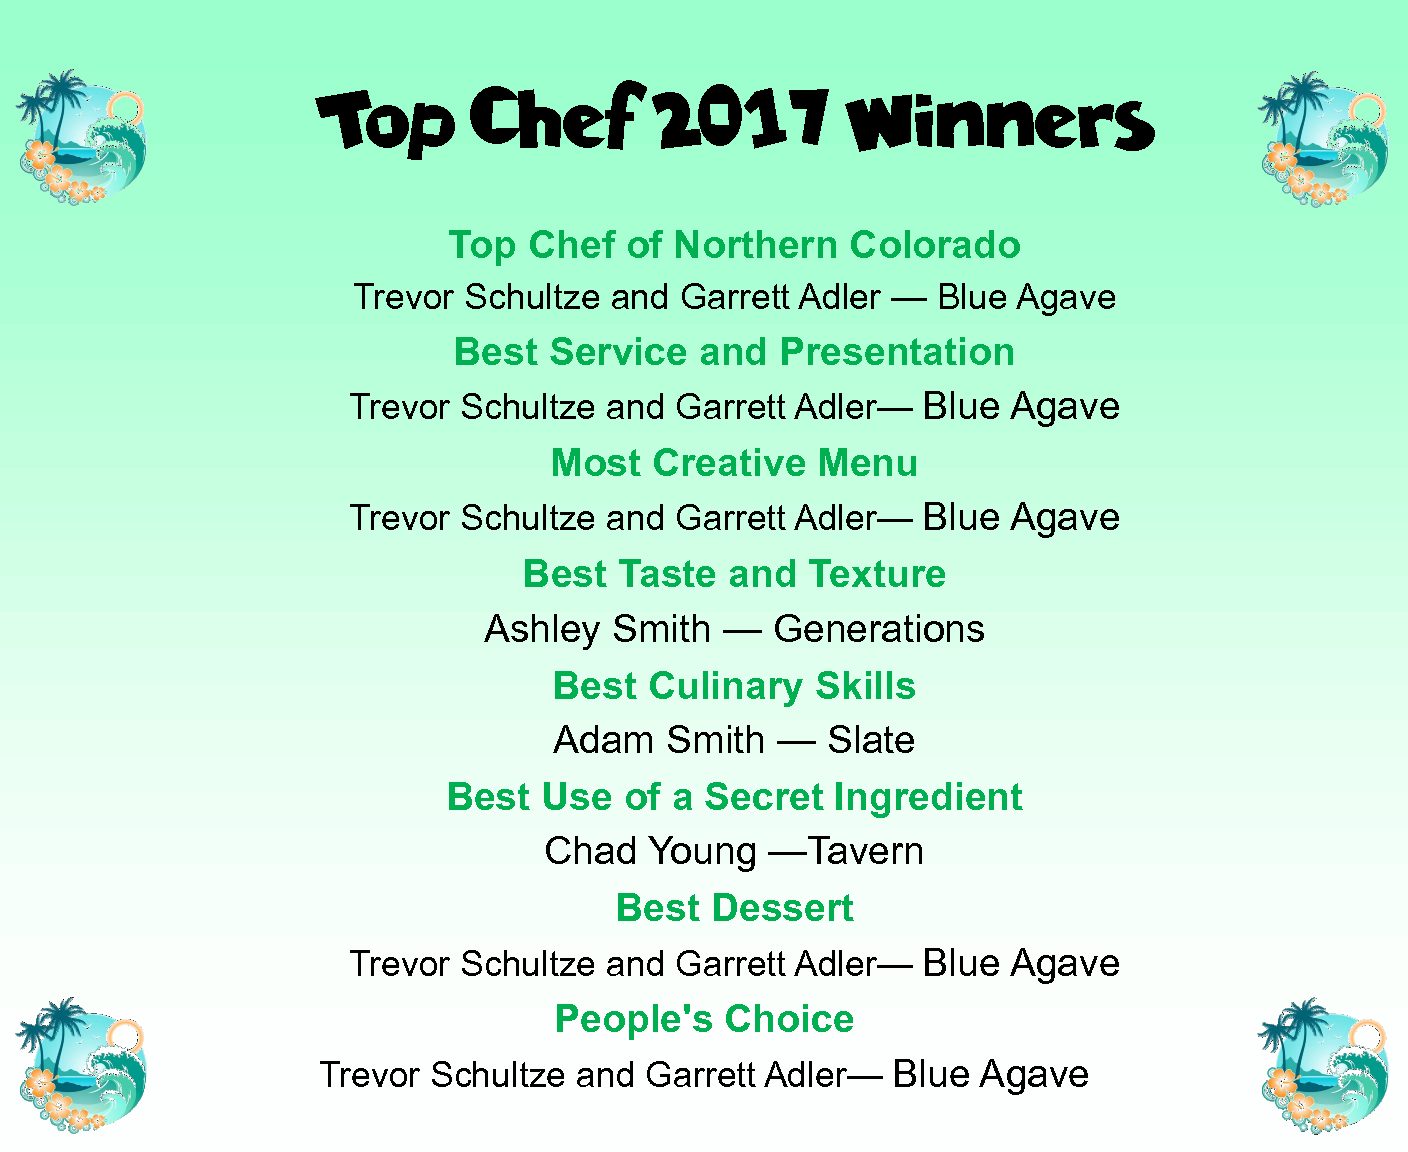 2017 Top Chef Winners